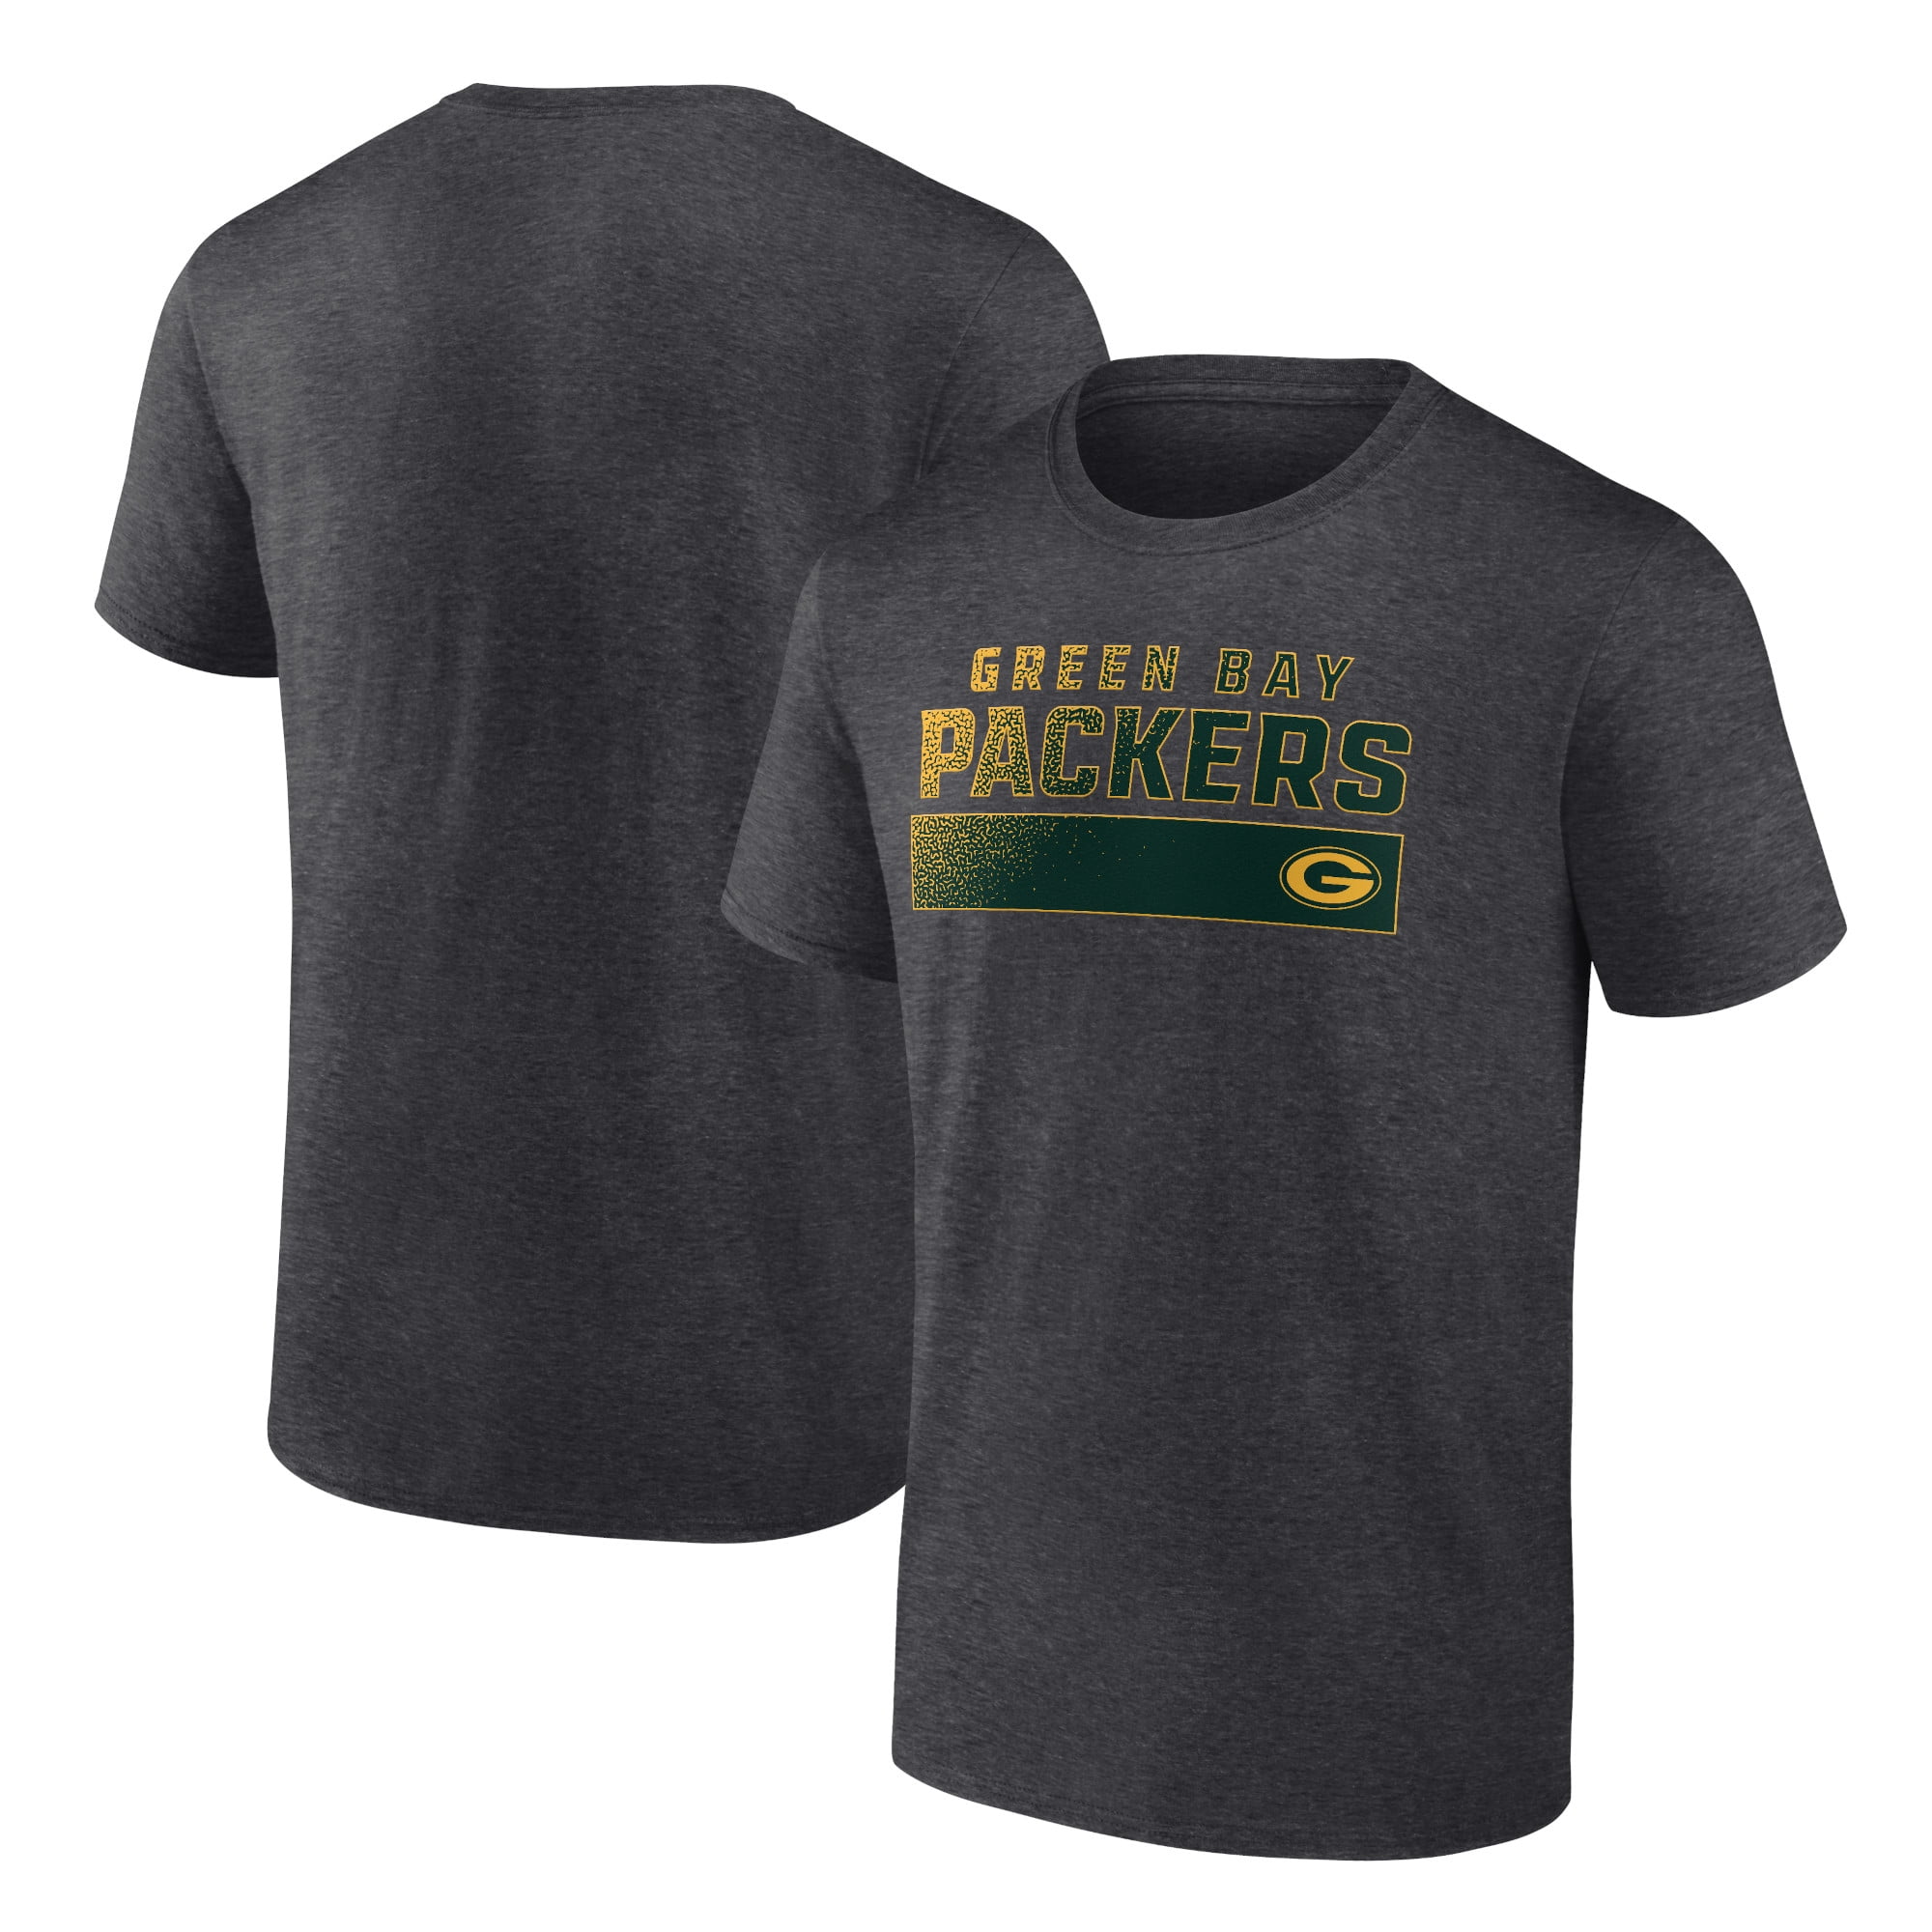 Men's Fanatics Branded Charcoal Green Bay Packers T-Shirt - Walmart.com